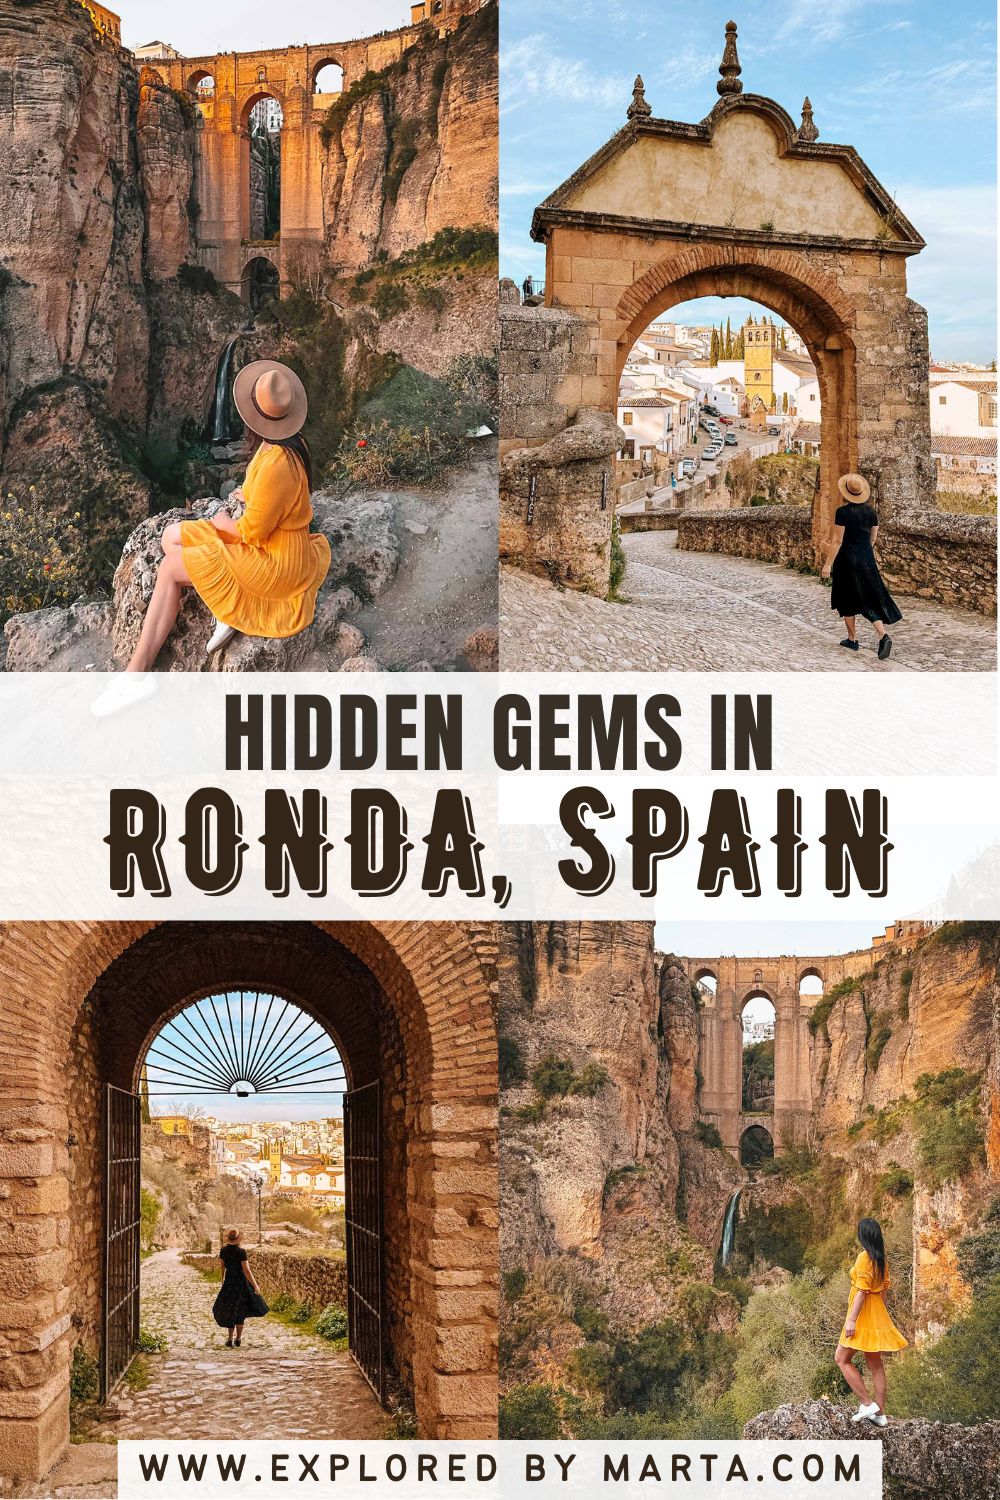 Hidden gems in Ronda, Spain